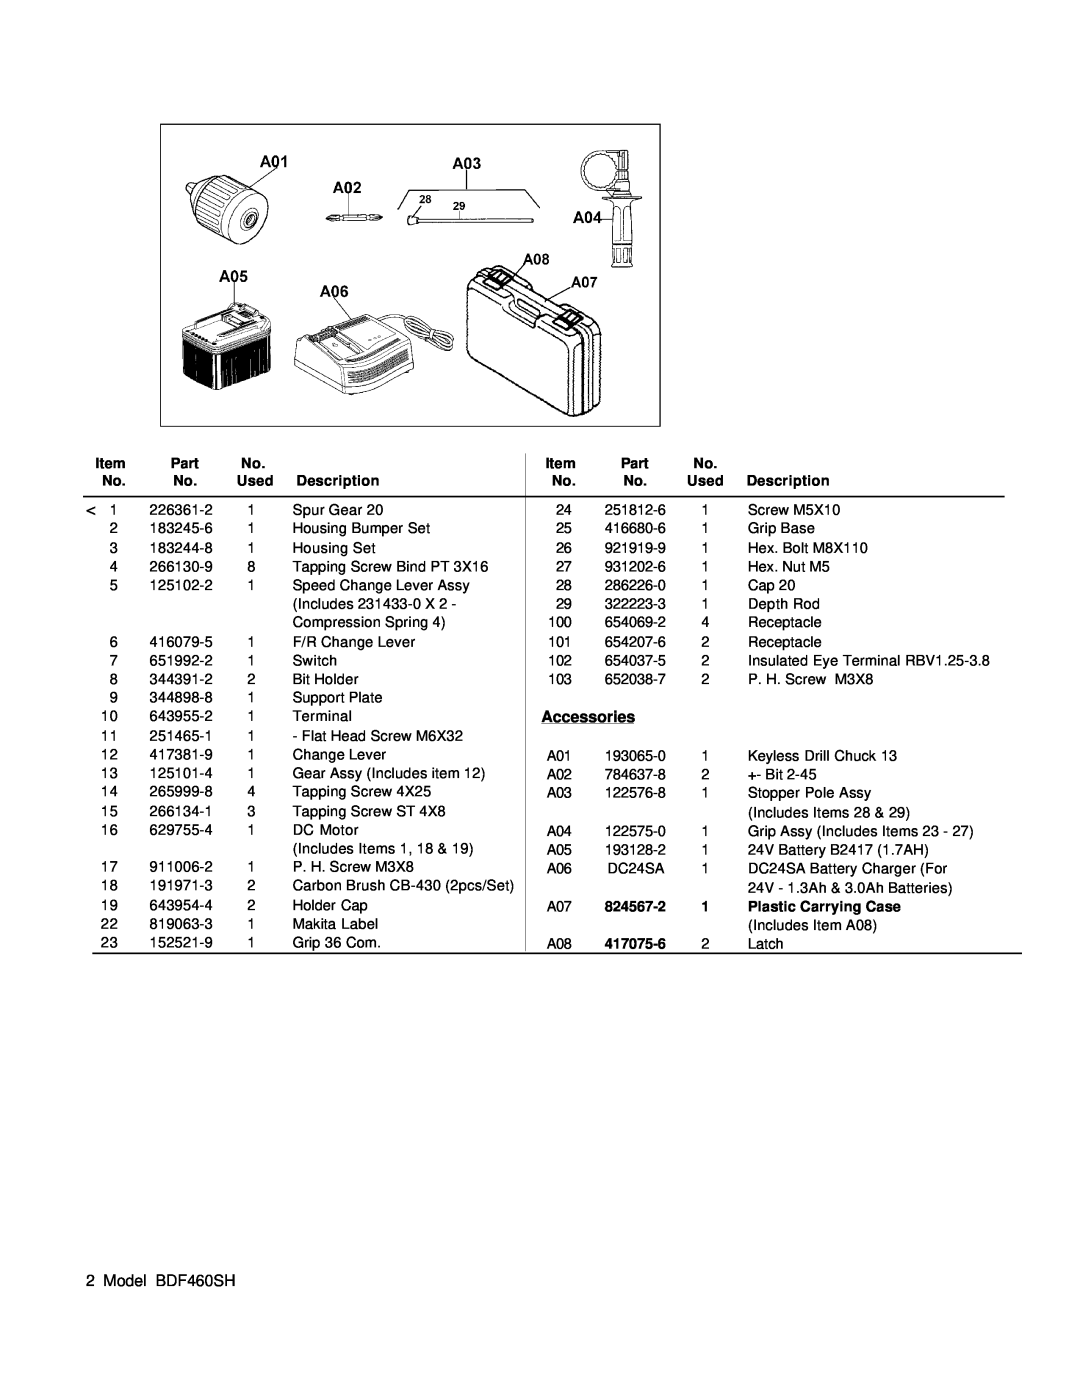 Makita manual Model BDF460SH, Used Description, Accessories, 824567-2, Plastic Carrying Case, 417075-6 